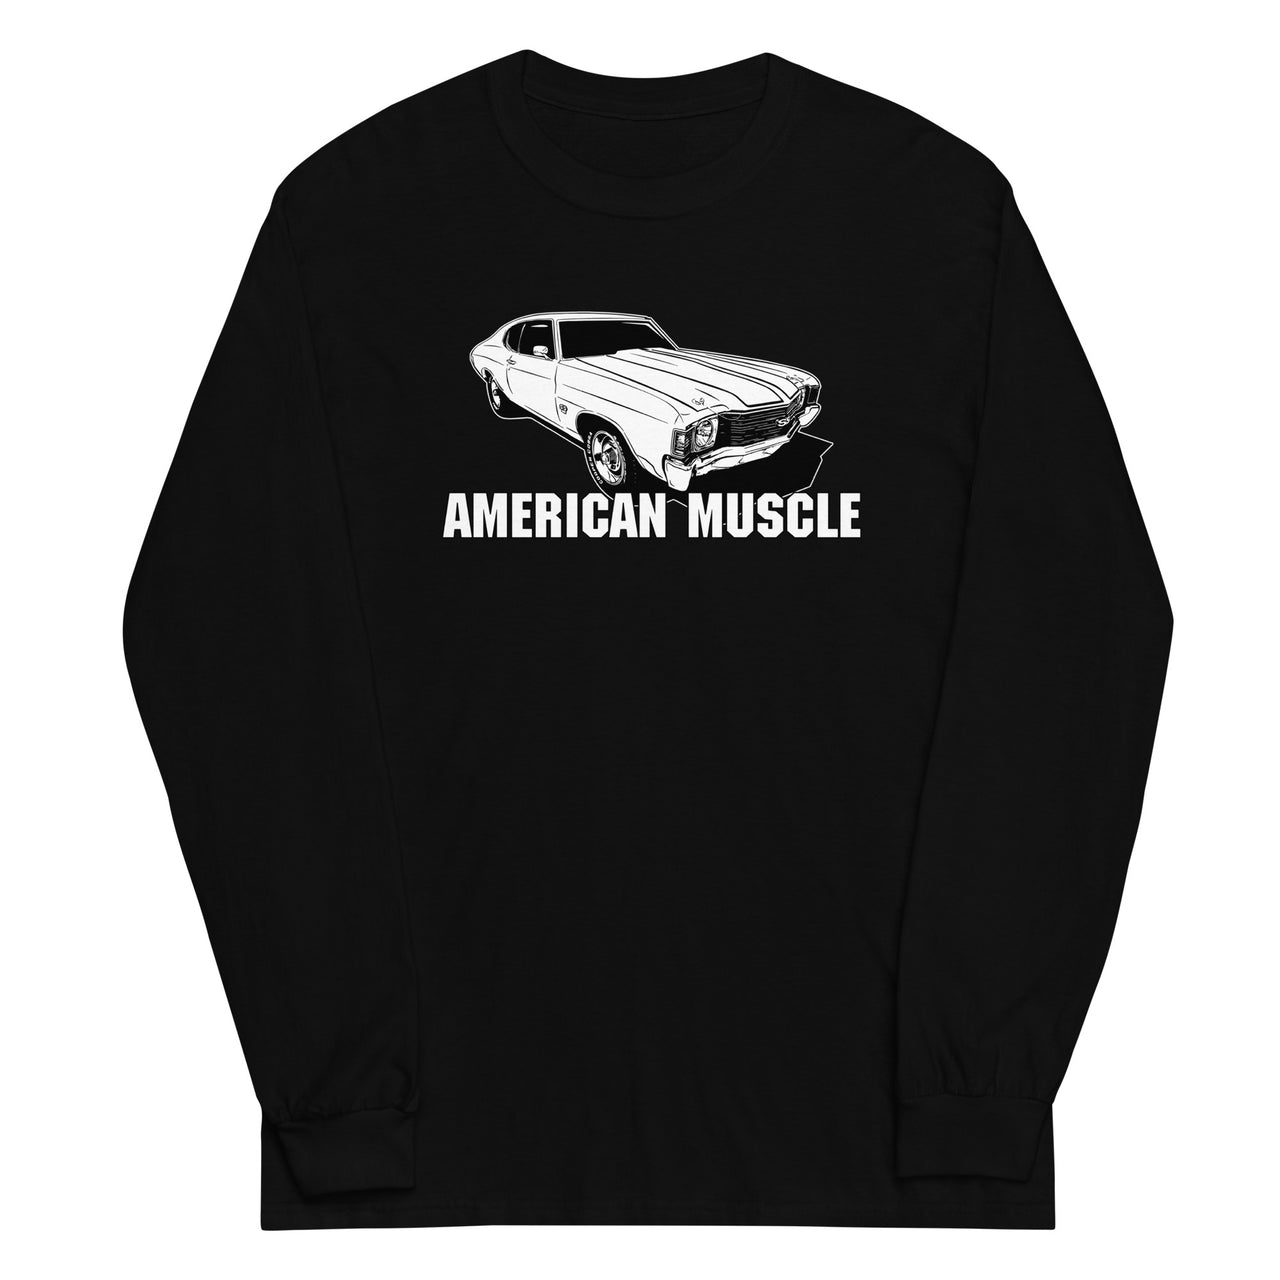 1972 Chevelle Car Long Sleeve Shirt American Muscle Car Tee black